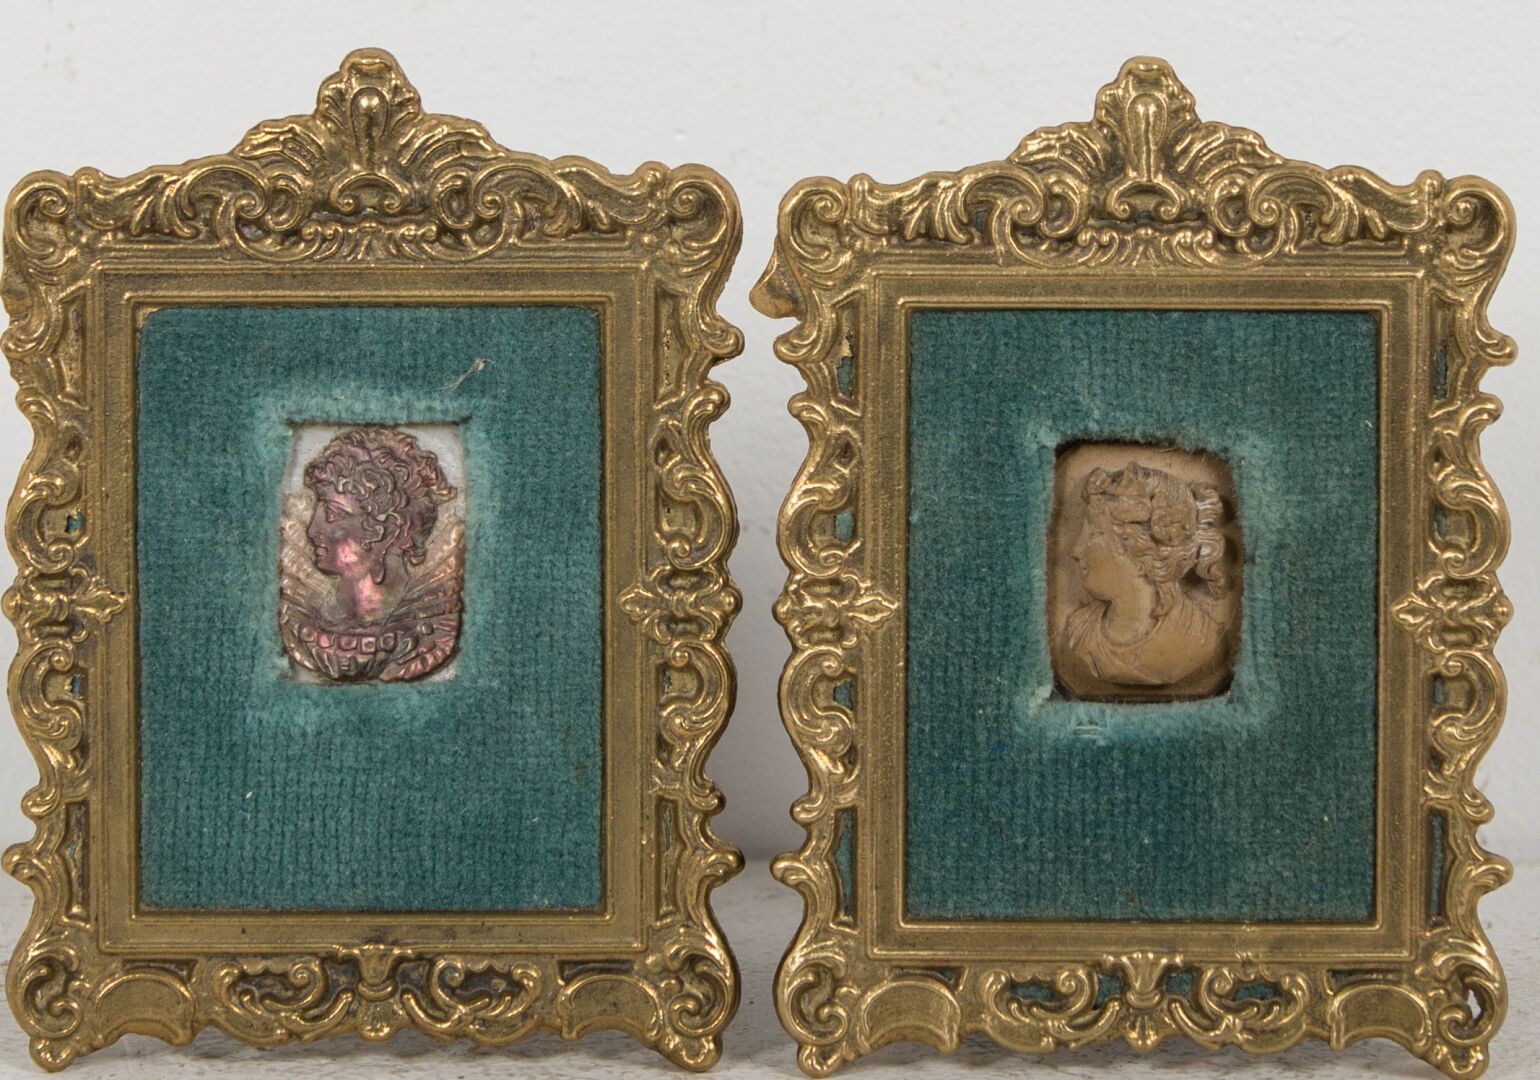 Null 两个描绘古代女性半身像的奖章，一个是珍珠母，另一个是熔岩石。

高_2.7厘米，宽_2厘米，大约。

呈现在天鹅绒背景的框架中